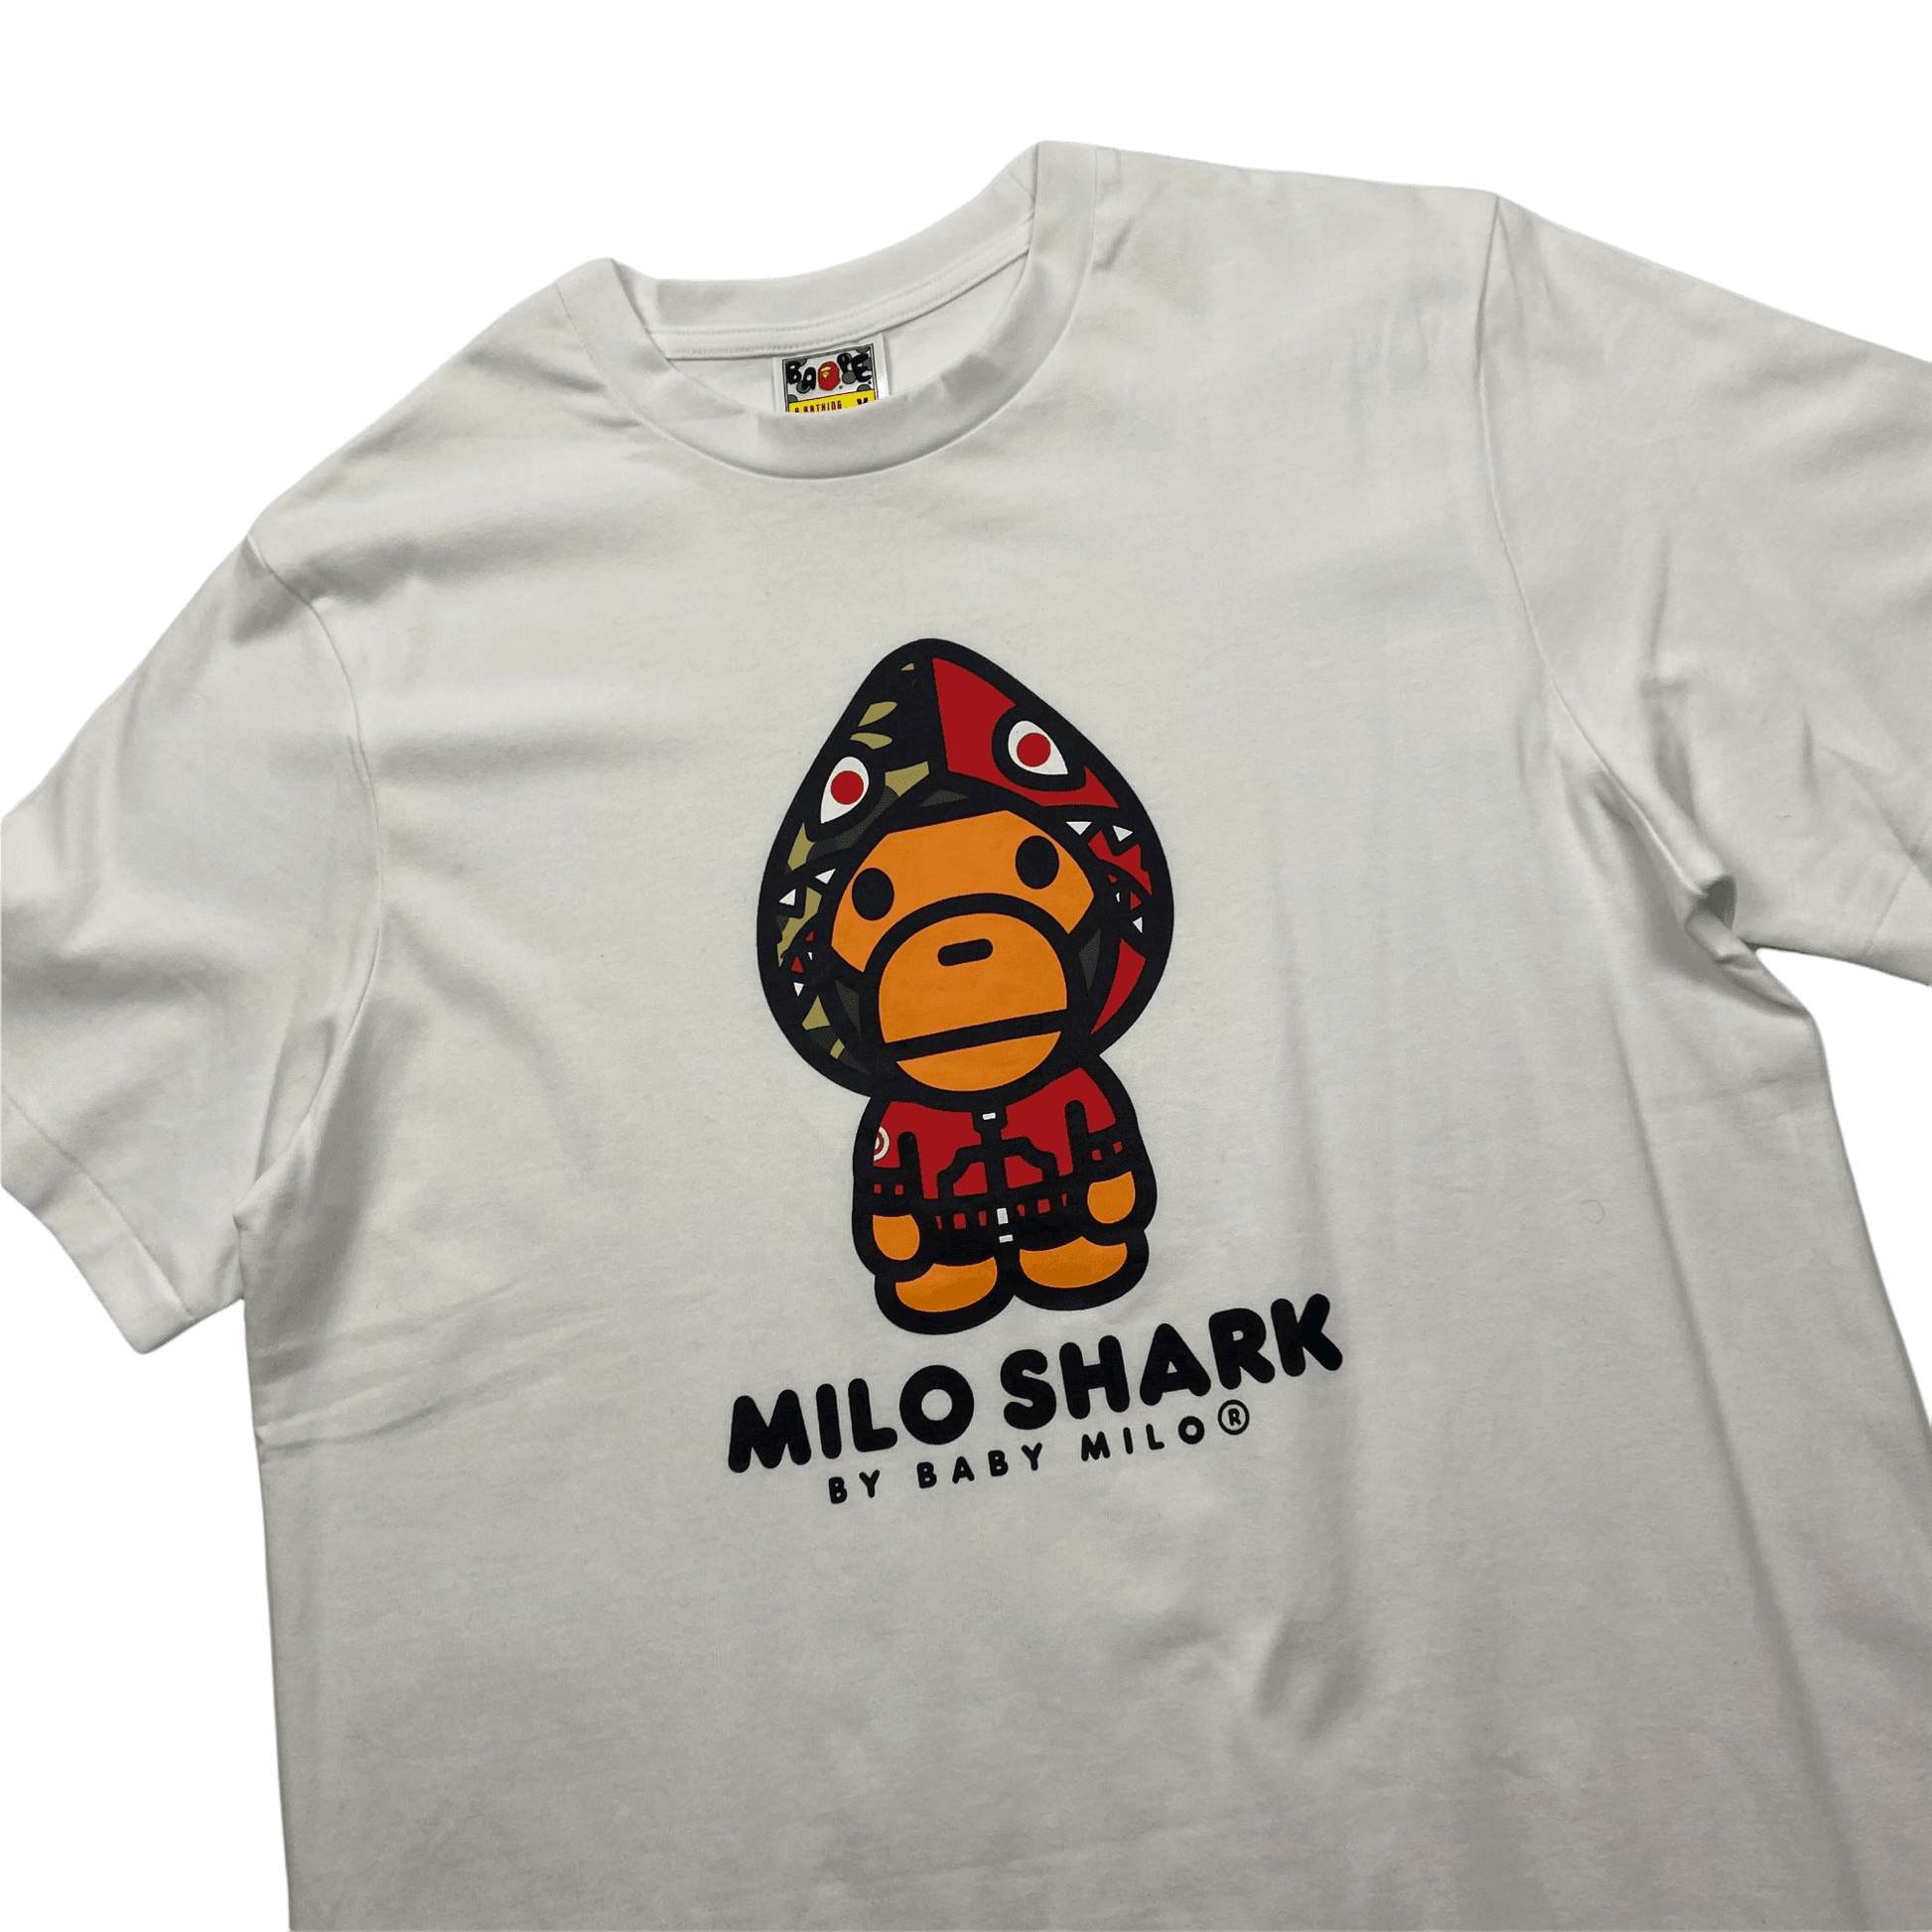 White A Bathing Ape (BAPE) Milo Shark Tee - Medium - The Streetwear Studio